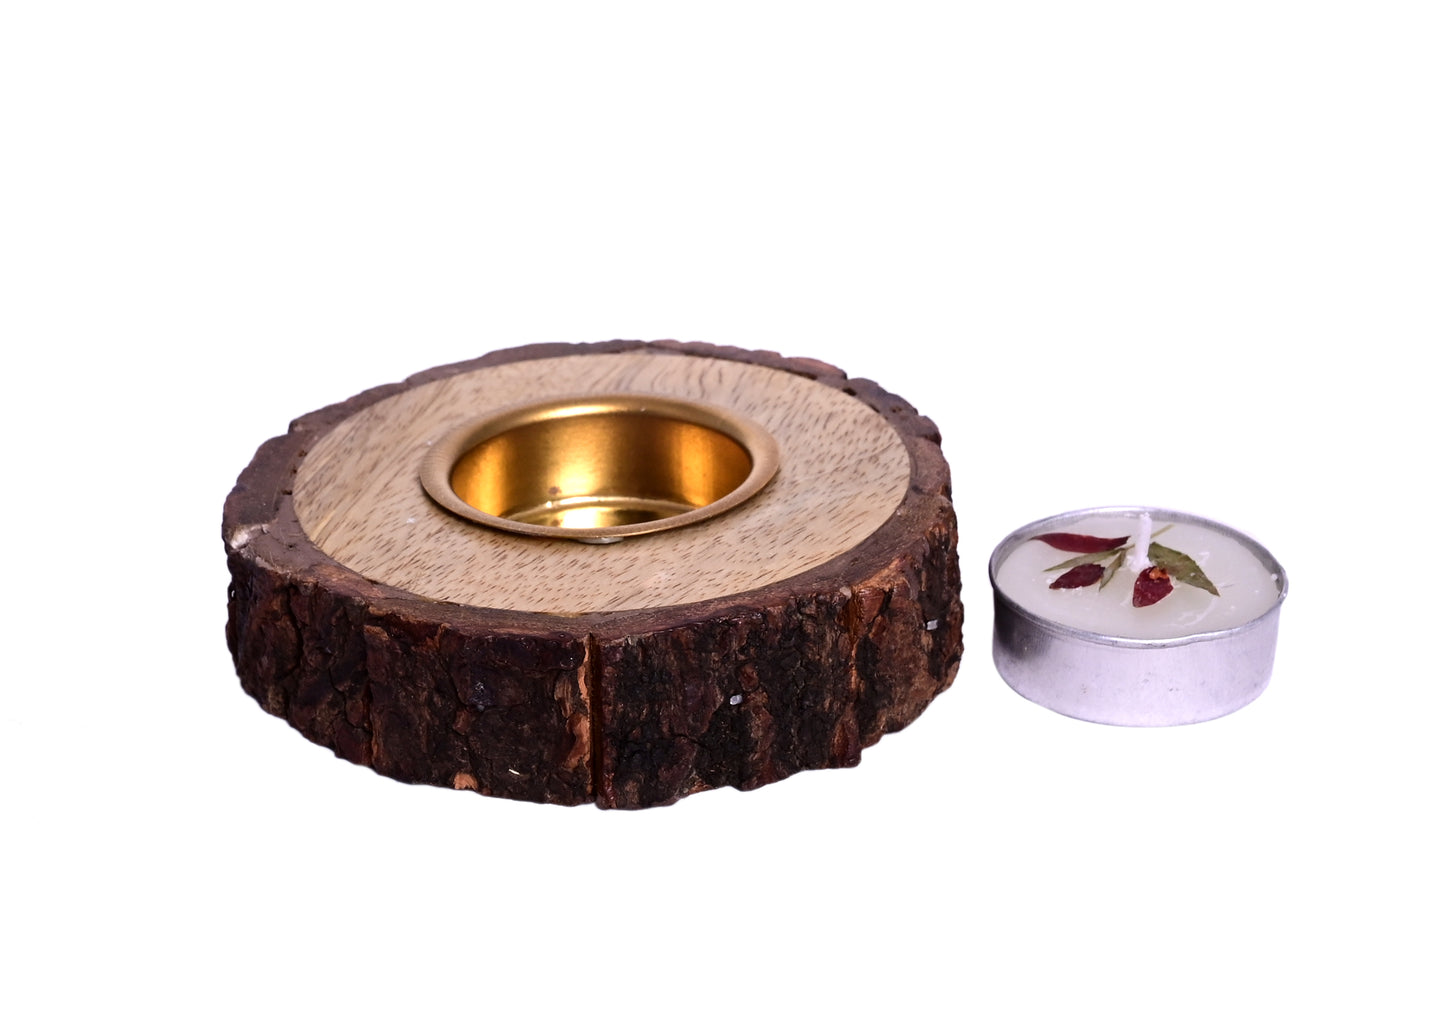 The Weaver's Nest Wooden Bark Handmade Tealight Candle Holder Set of Two